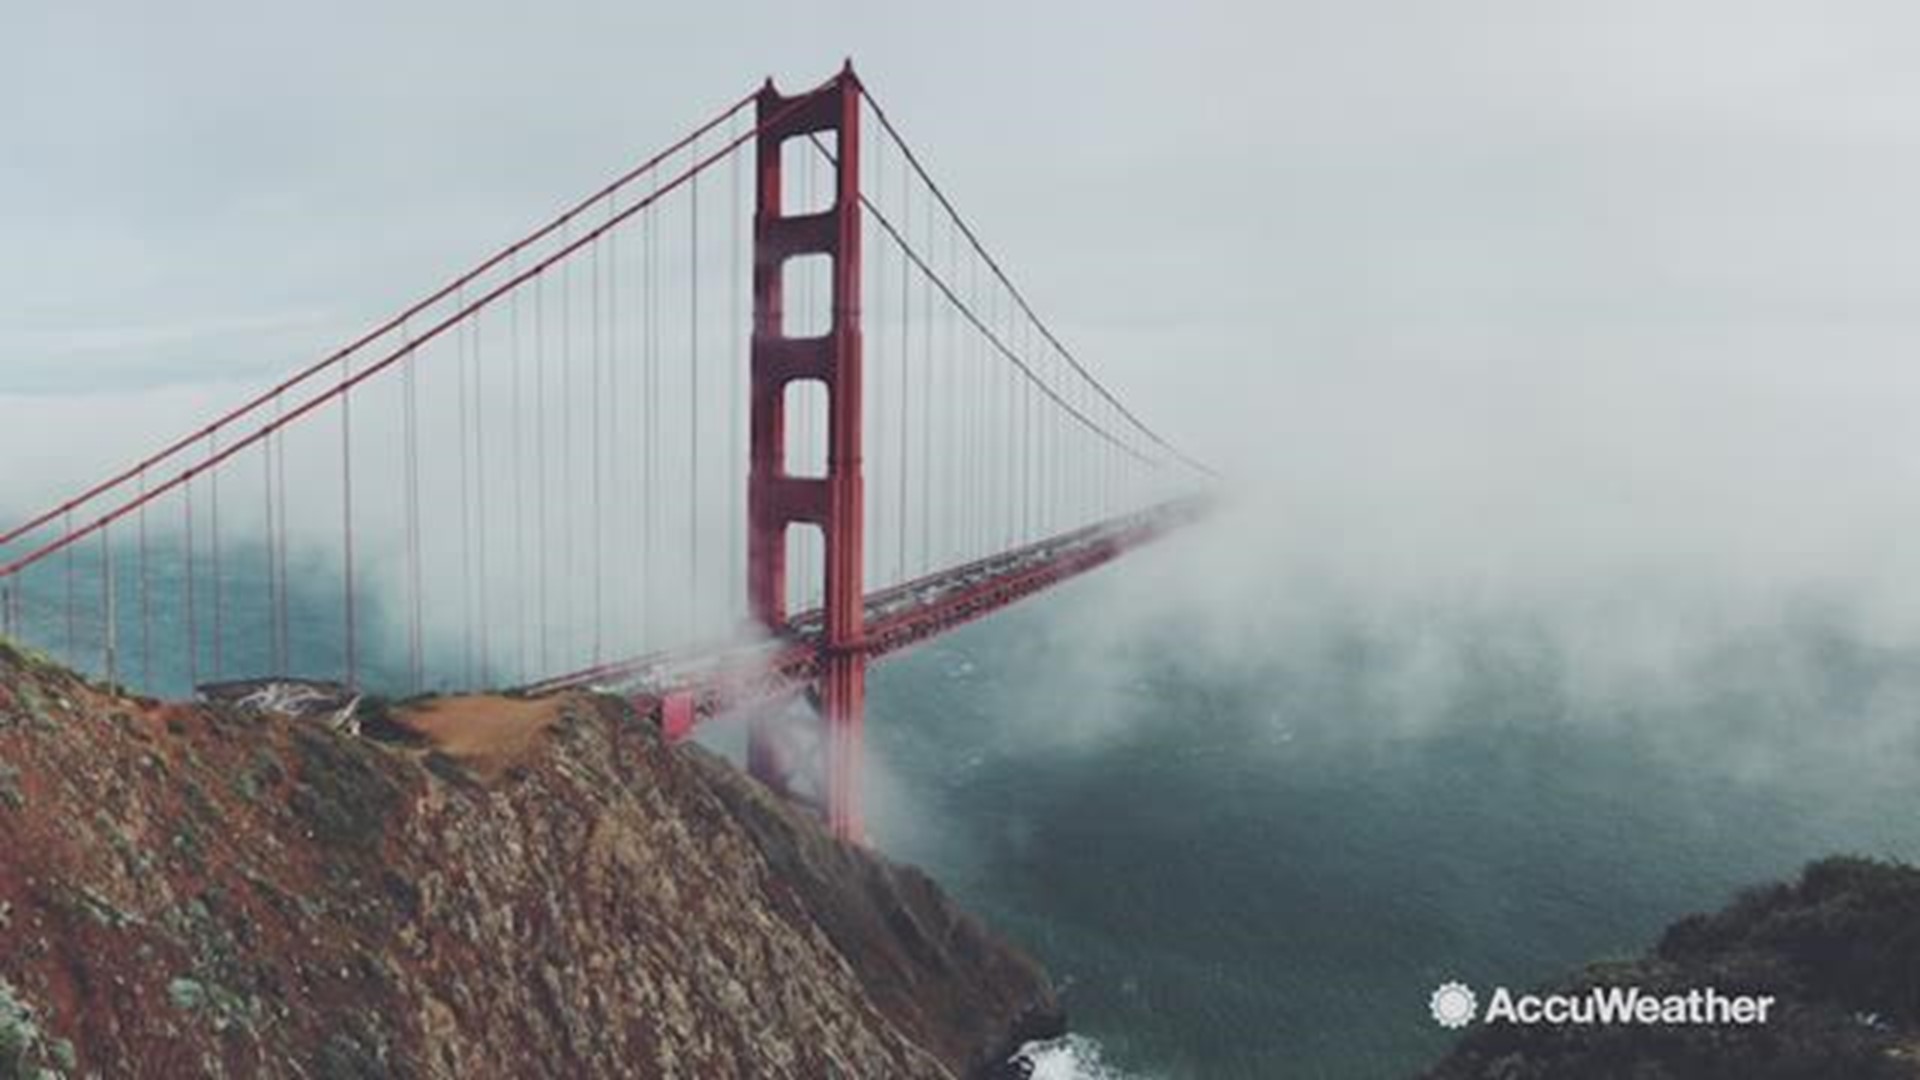 Key Bridge in the fog from a few years back. Felt like sharing